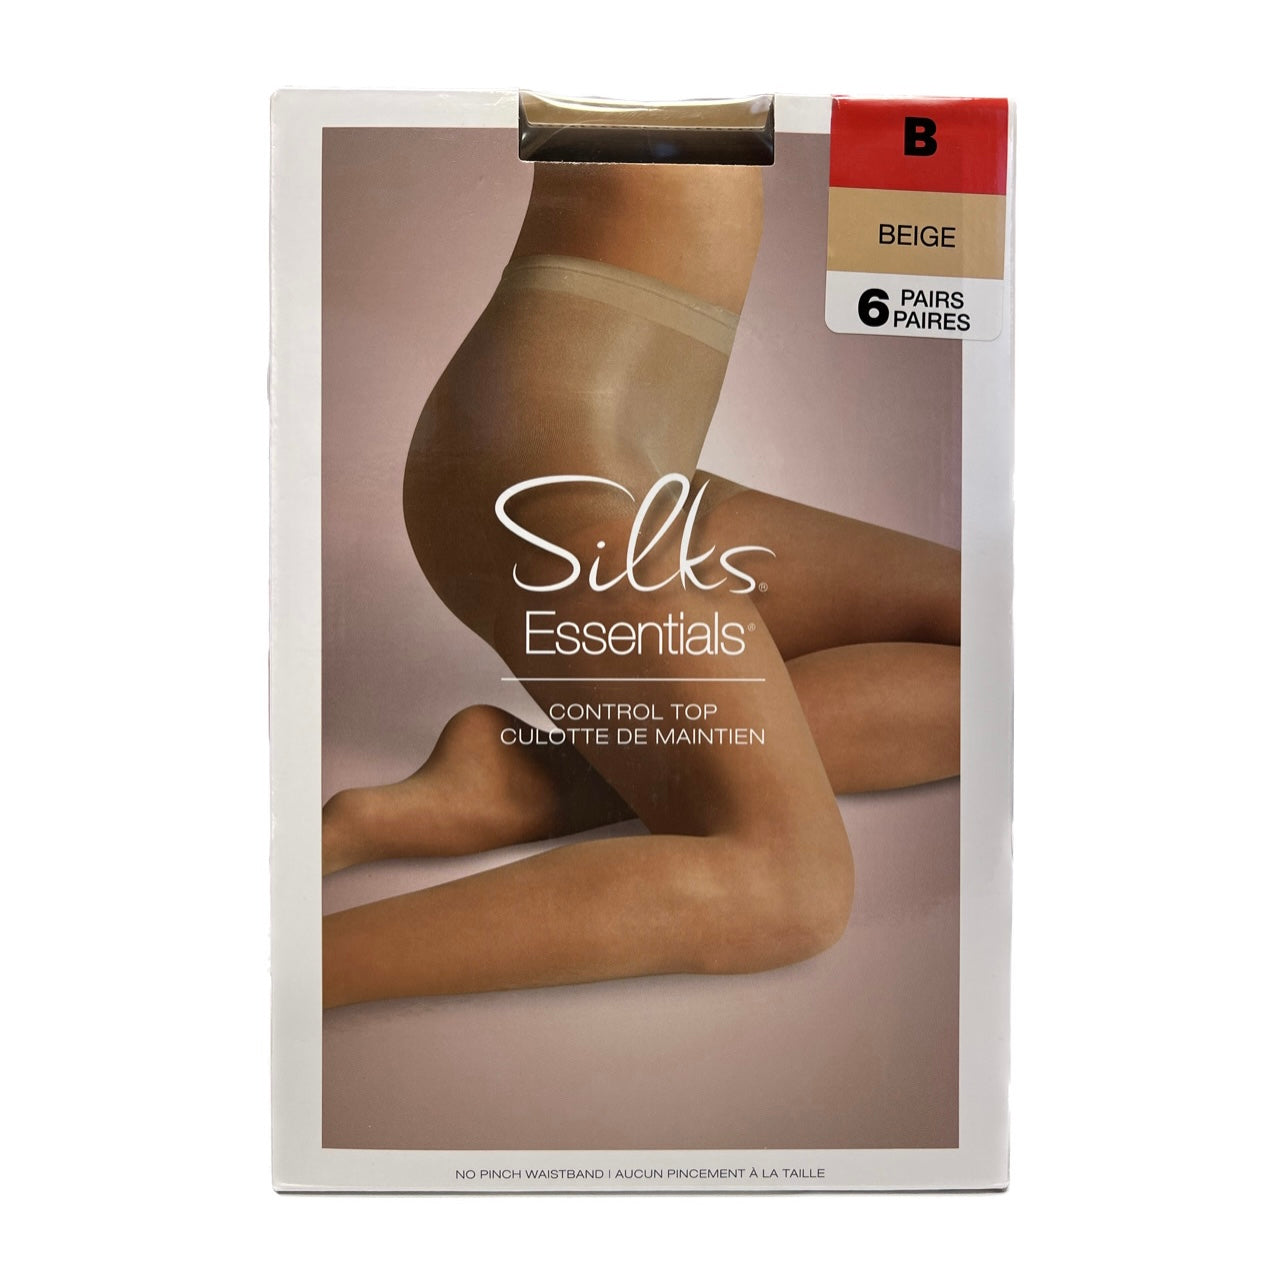 silks-essentials-paquet-6-paires-culottes-maintien-control-top